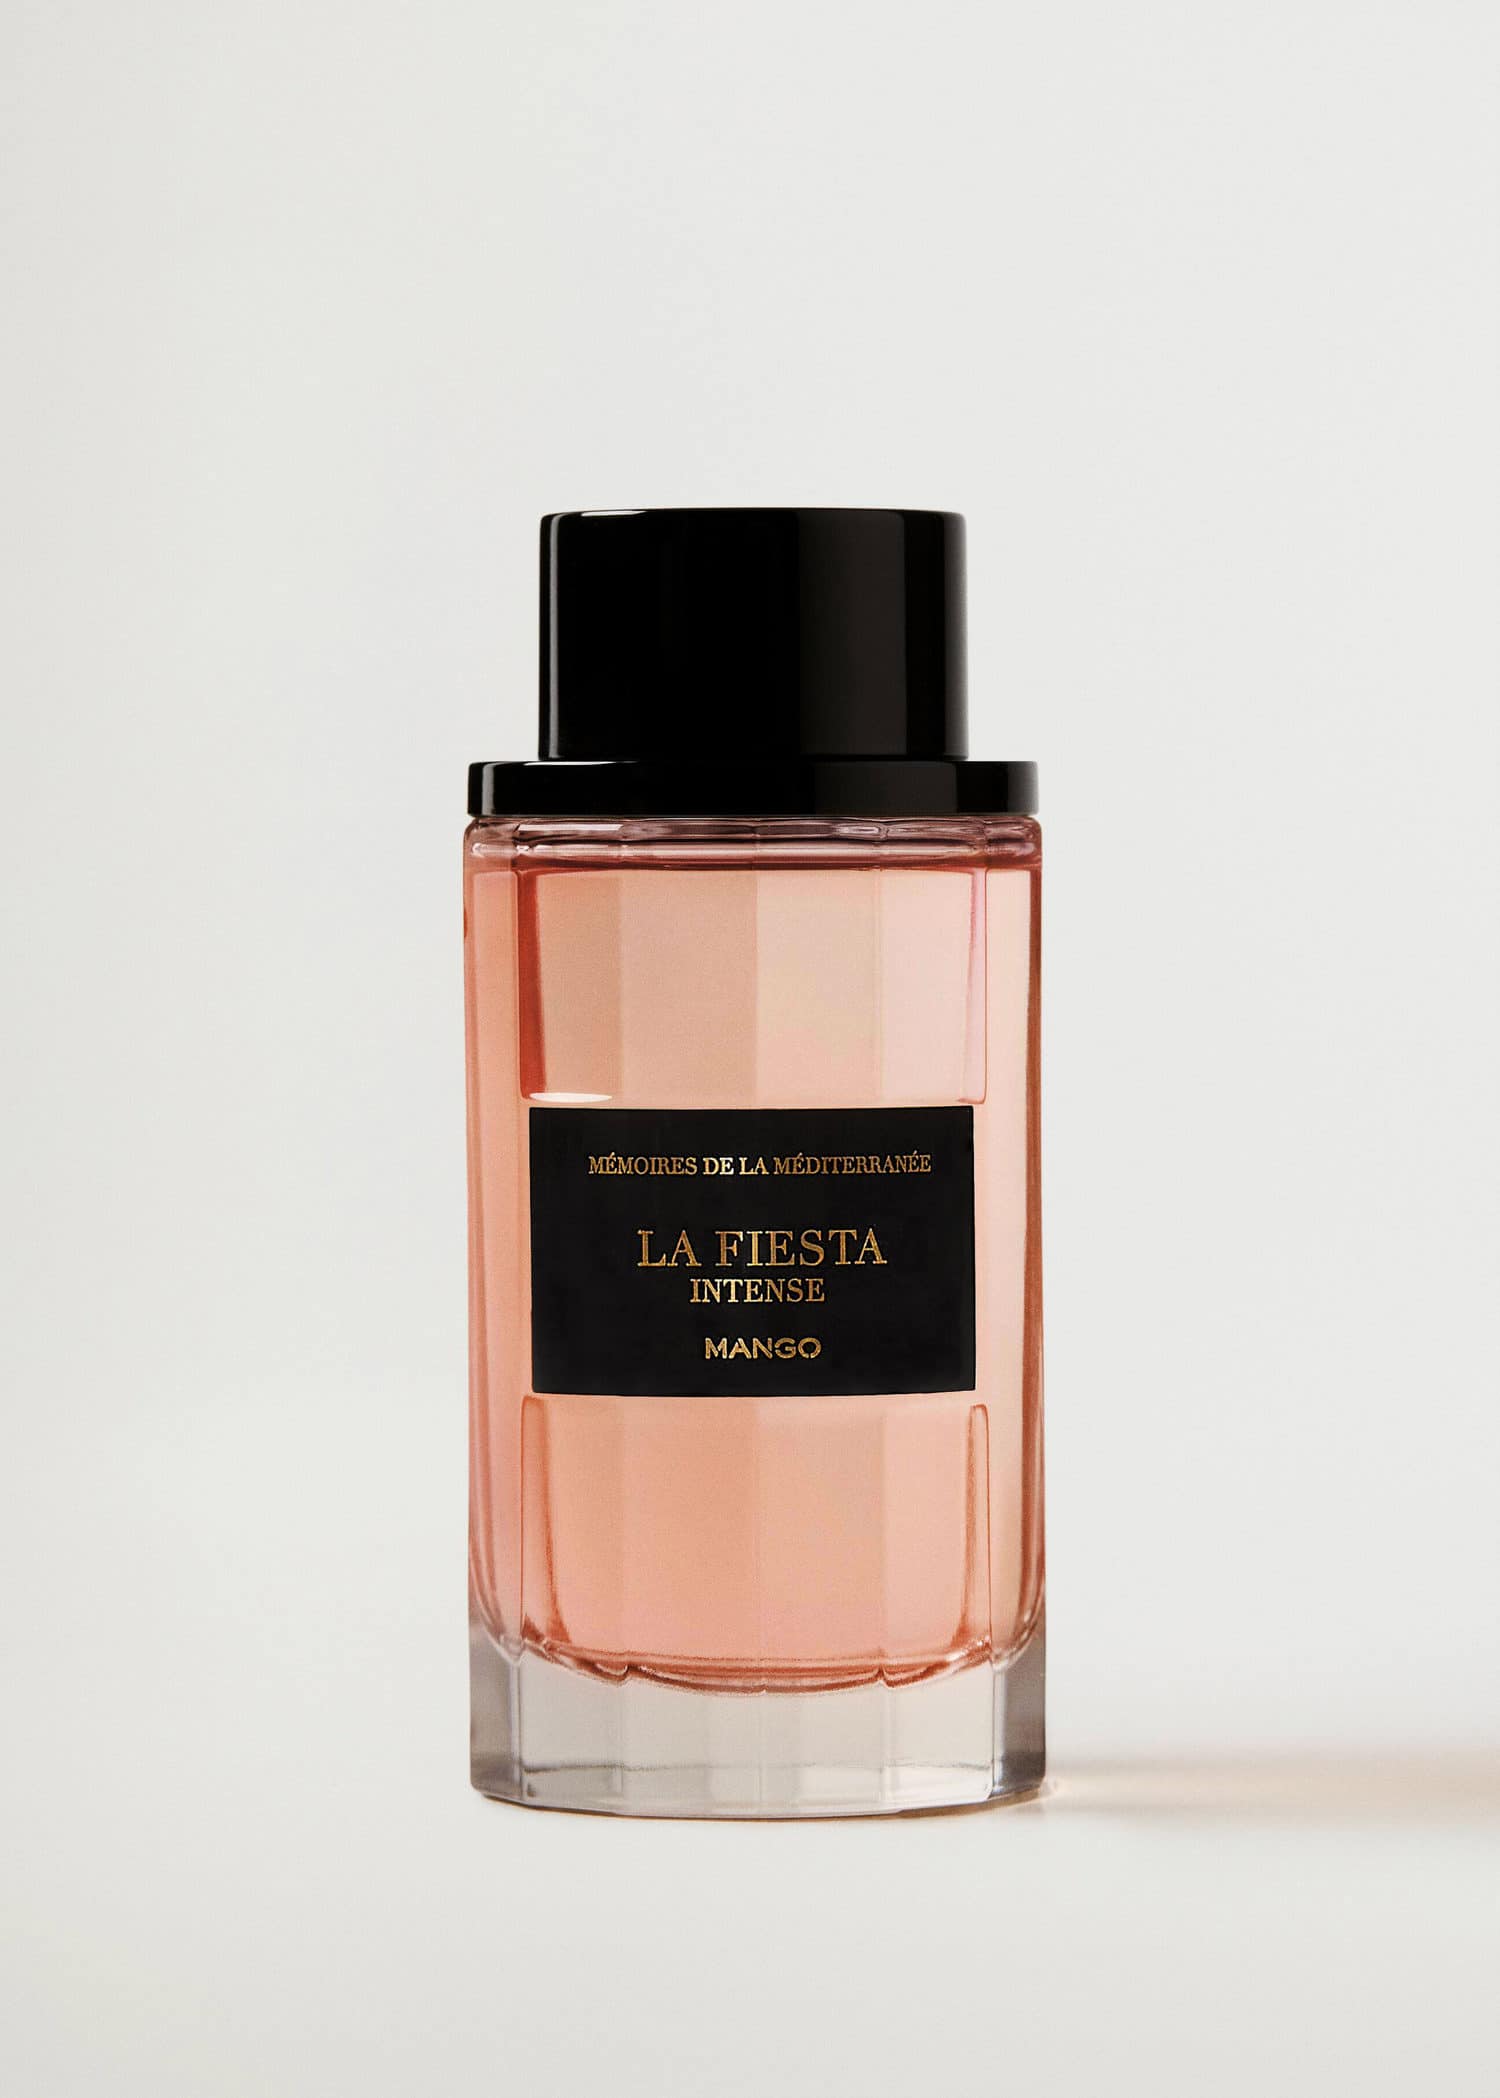 La Fiesta intense fragrance 100 ml - Article without model